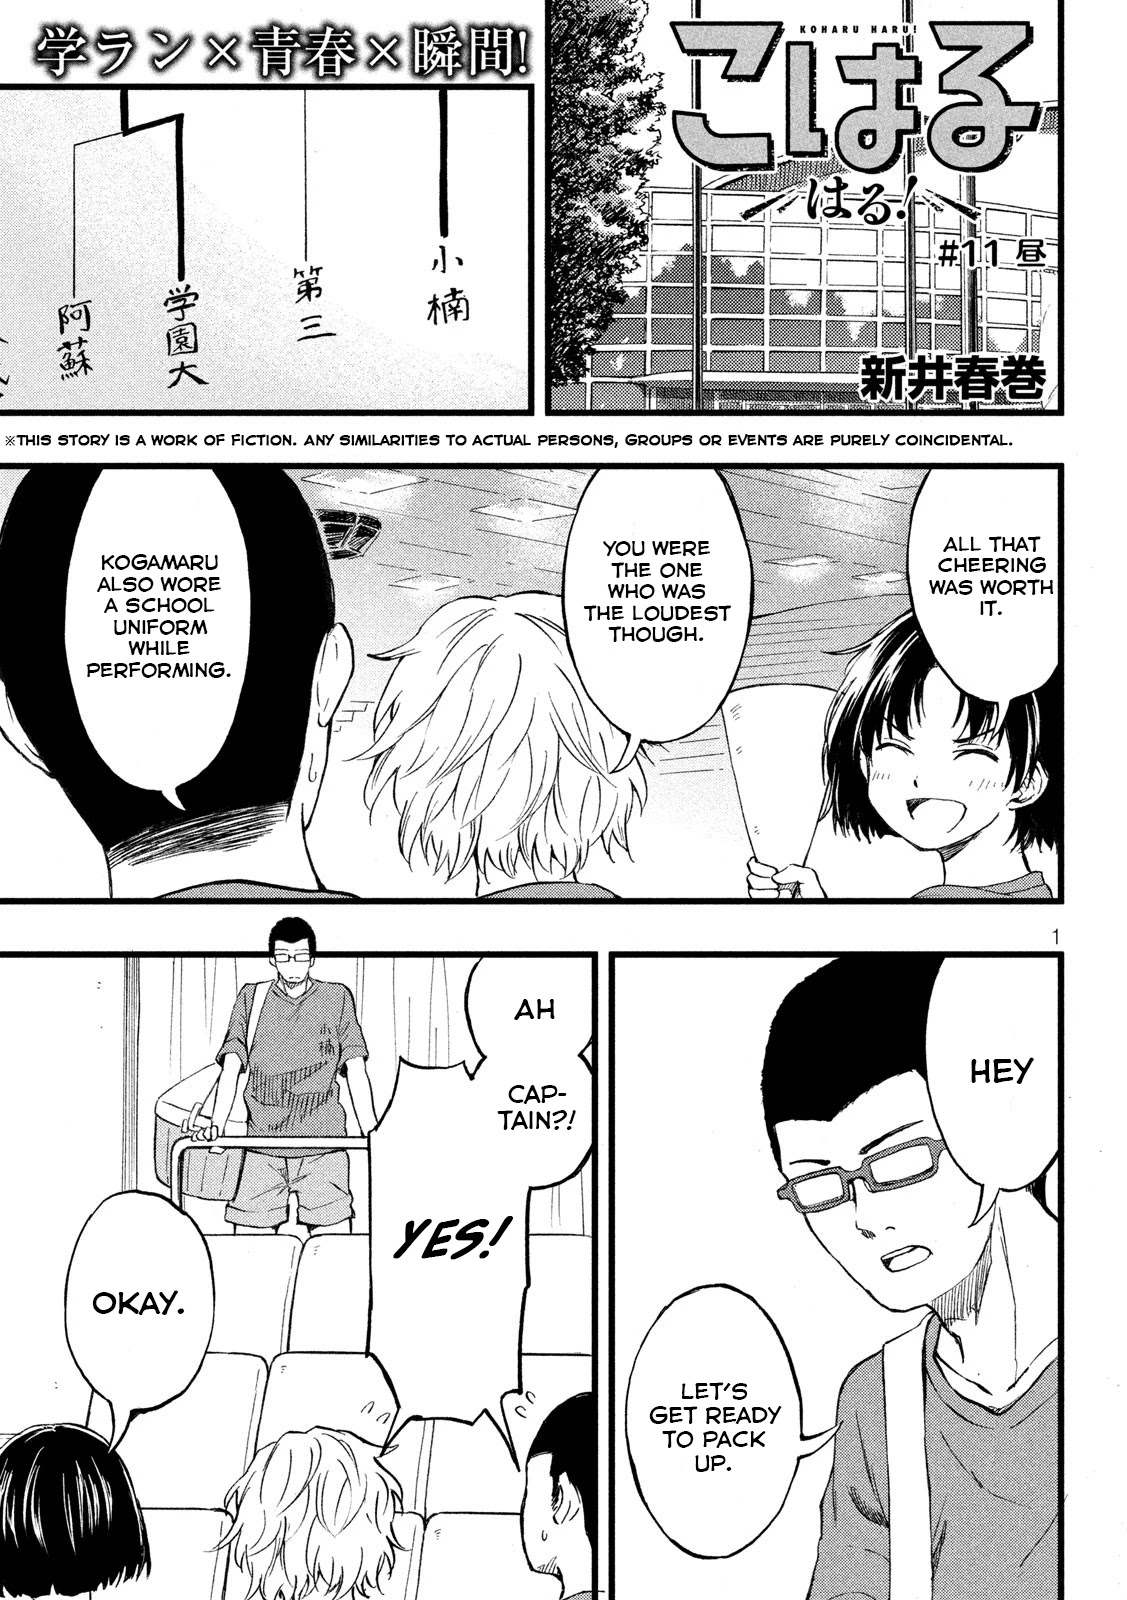 Koharu Haru! - Page 1